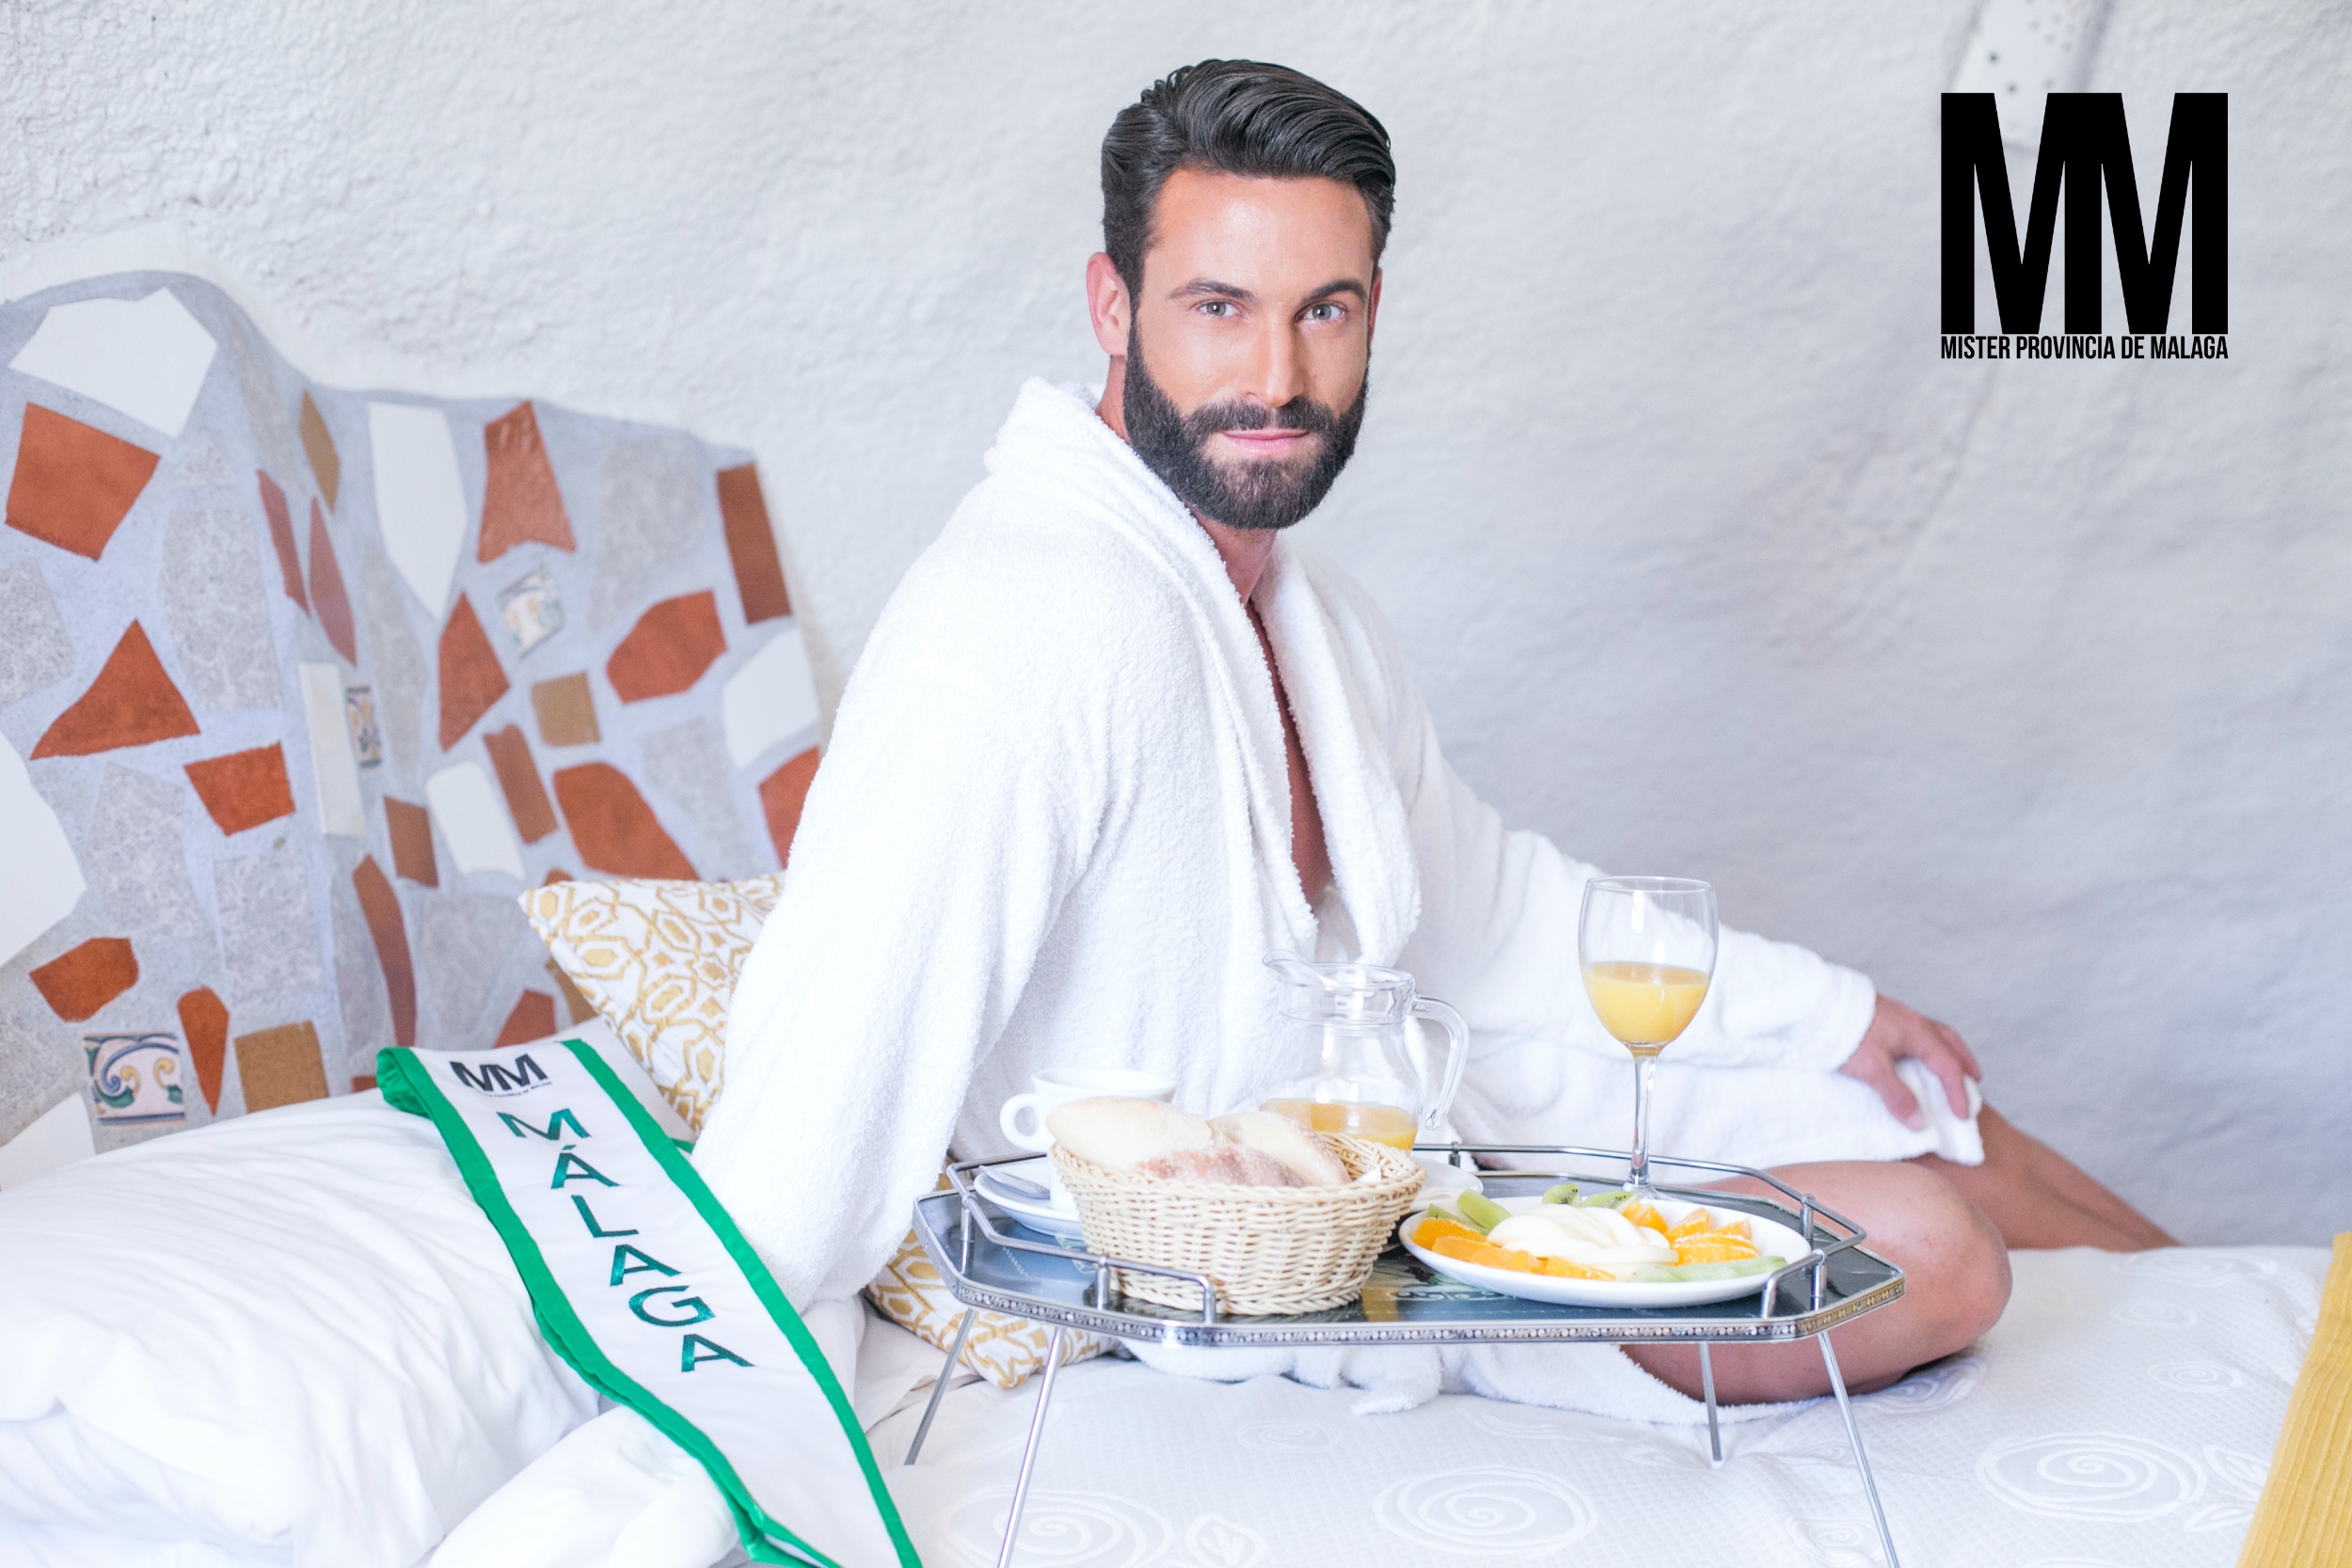 Desayuno Real Alejandro Gil Mister Provincia de Malaga 2020 1